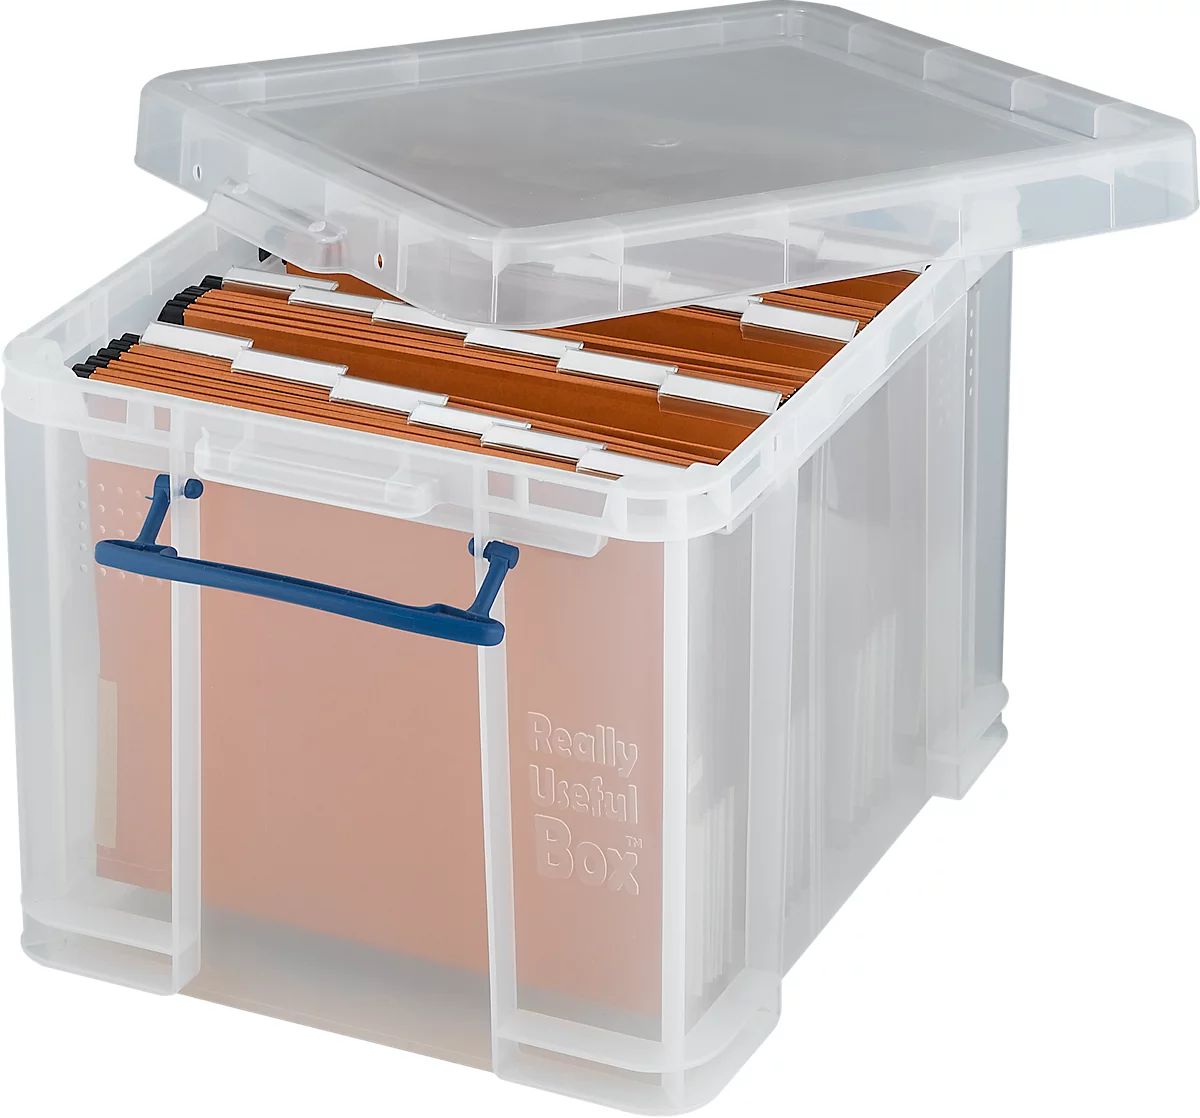 Transportbox Really Useful Box, Volumen 35 l, L 480 x B 390 x H 310 mm, stapelbar, mit Deckel & Klappgriffen, Recycling-PP, transparent